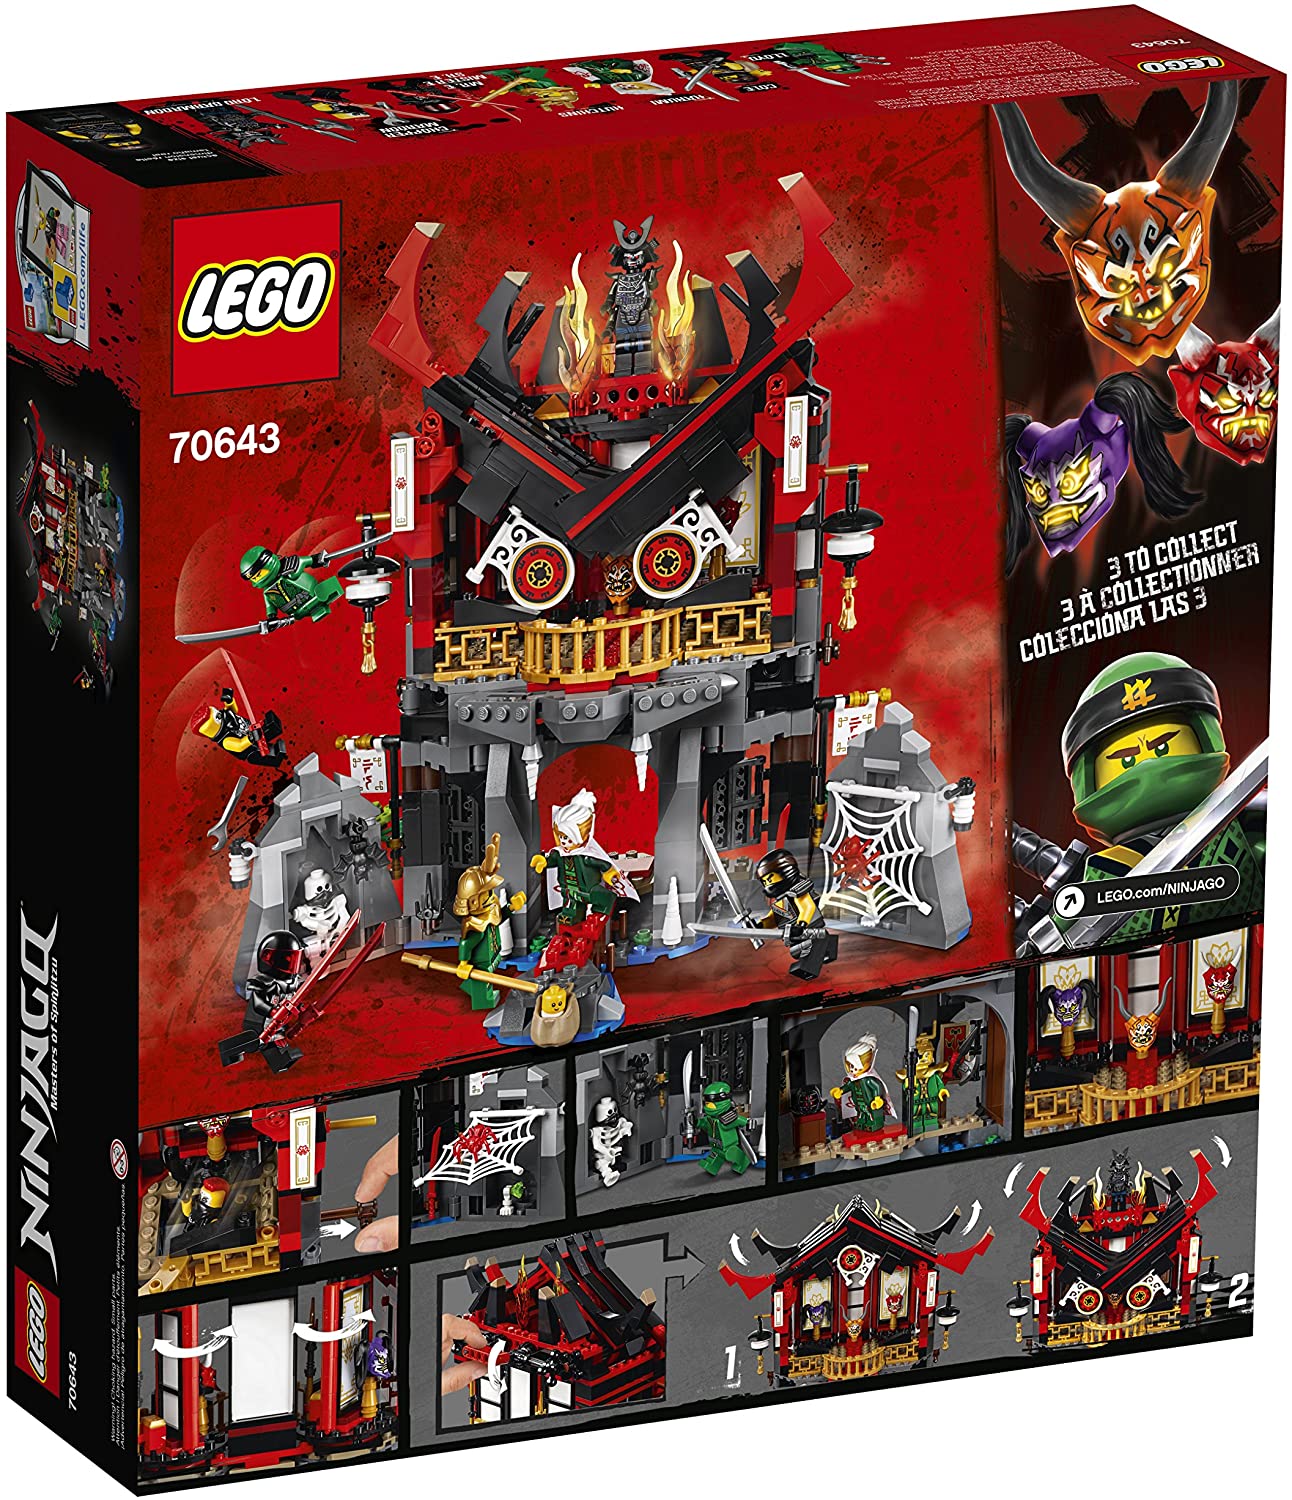 Duchess fantastisk voldgrav LEGO® Ninjago 70643 Temple of Resurrection (765 pieces) – AESOP'S FABLE